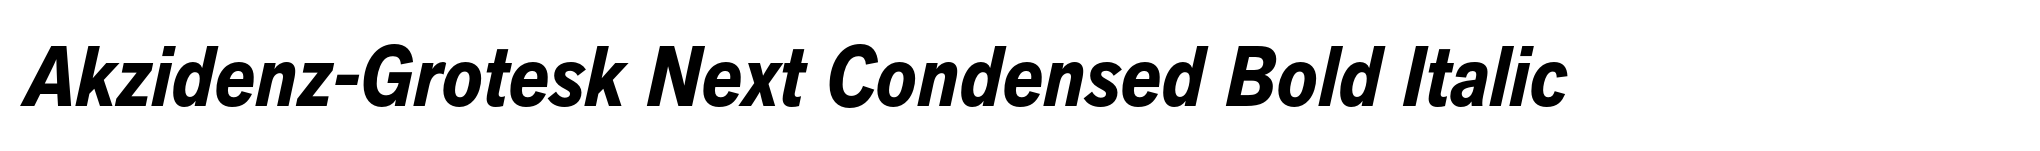 Akzidenz-Grotesk Next Condensed Bold Italic image